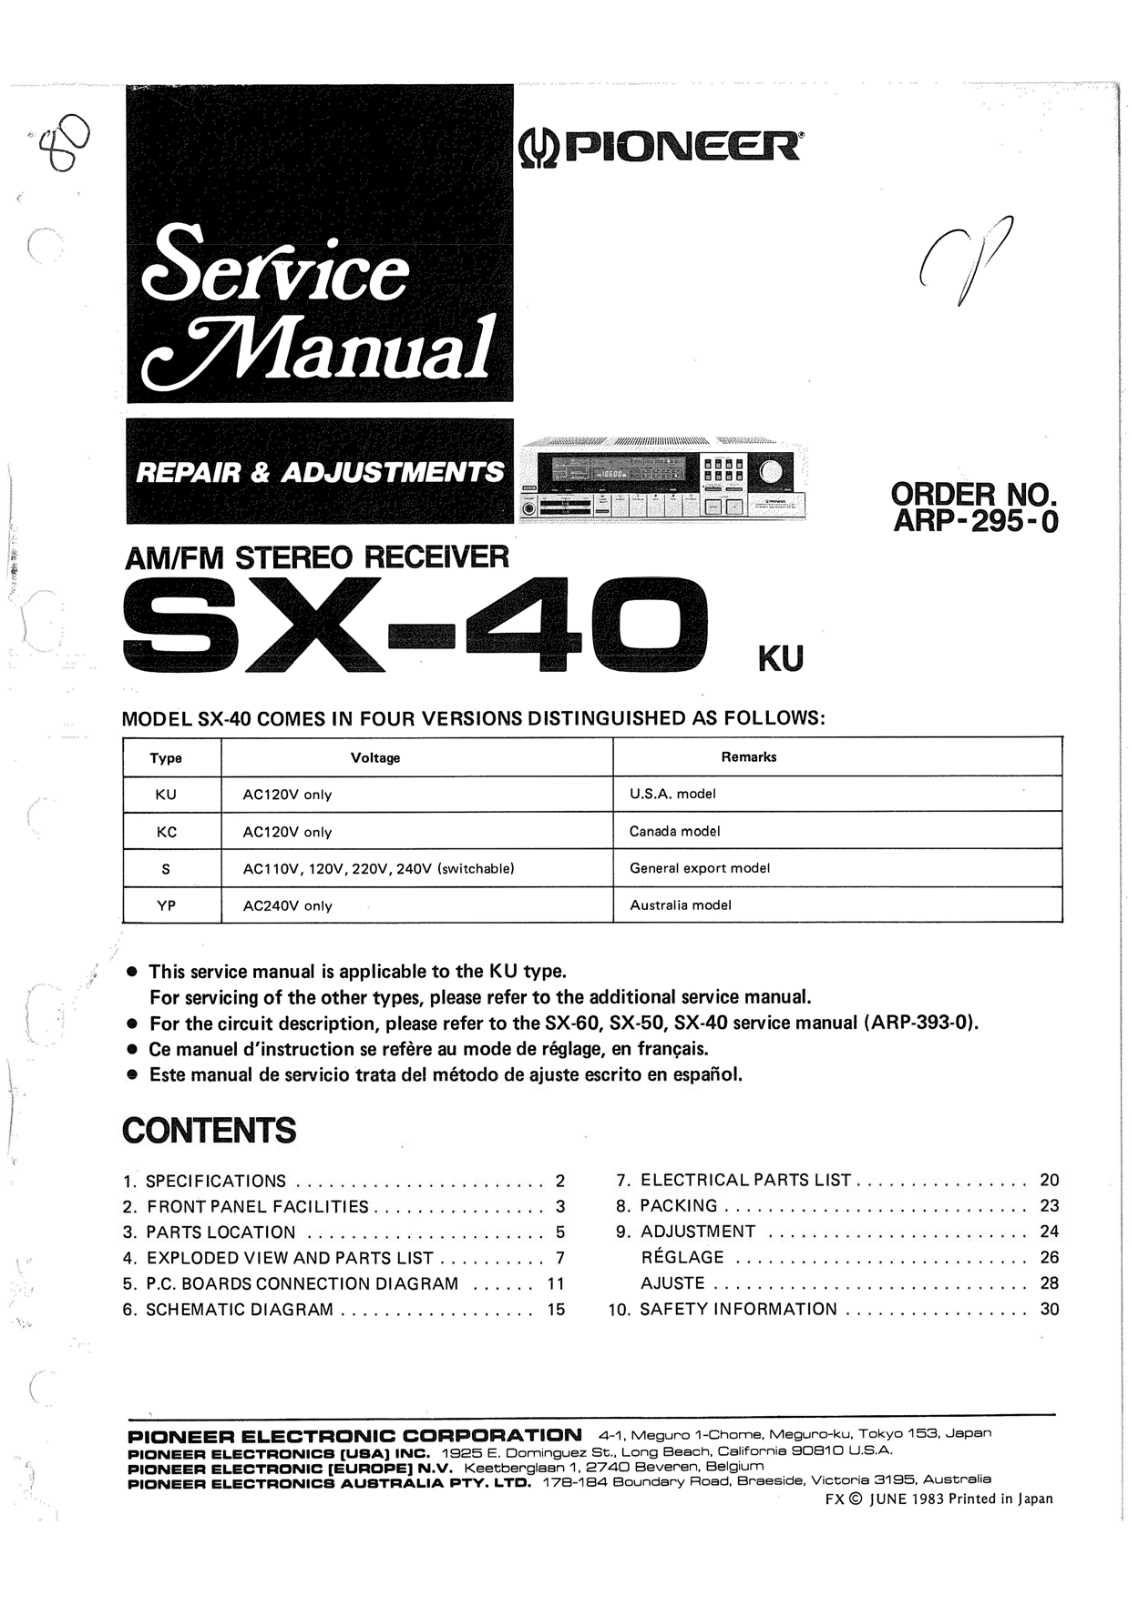 Pioneer SX-40 Service Manual